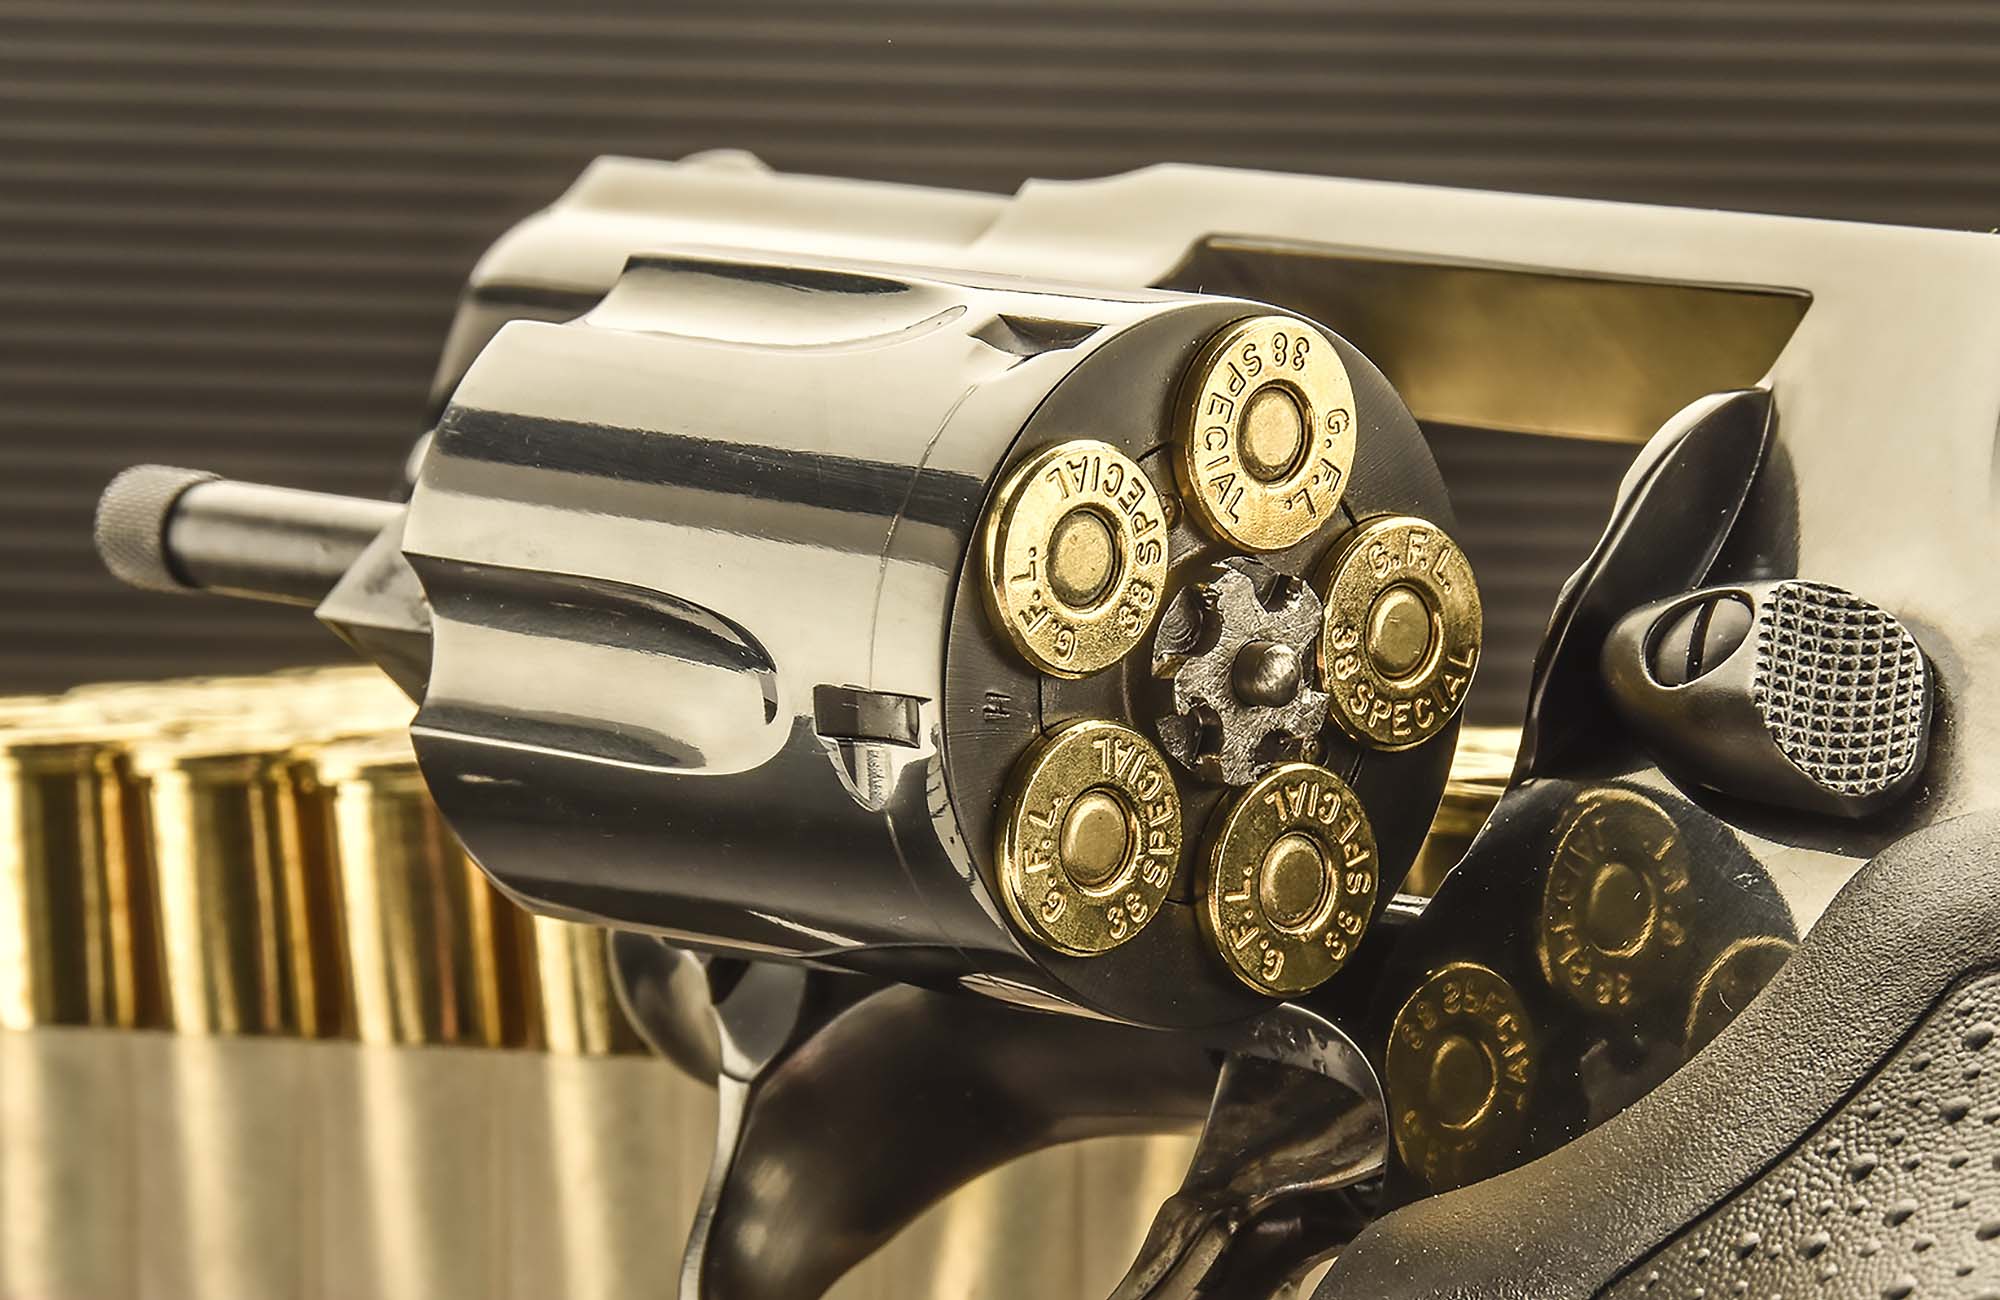 38 special revolver